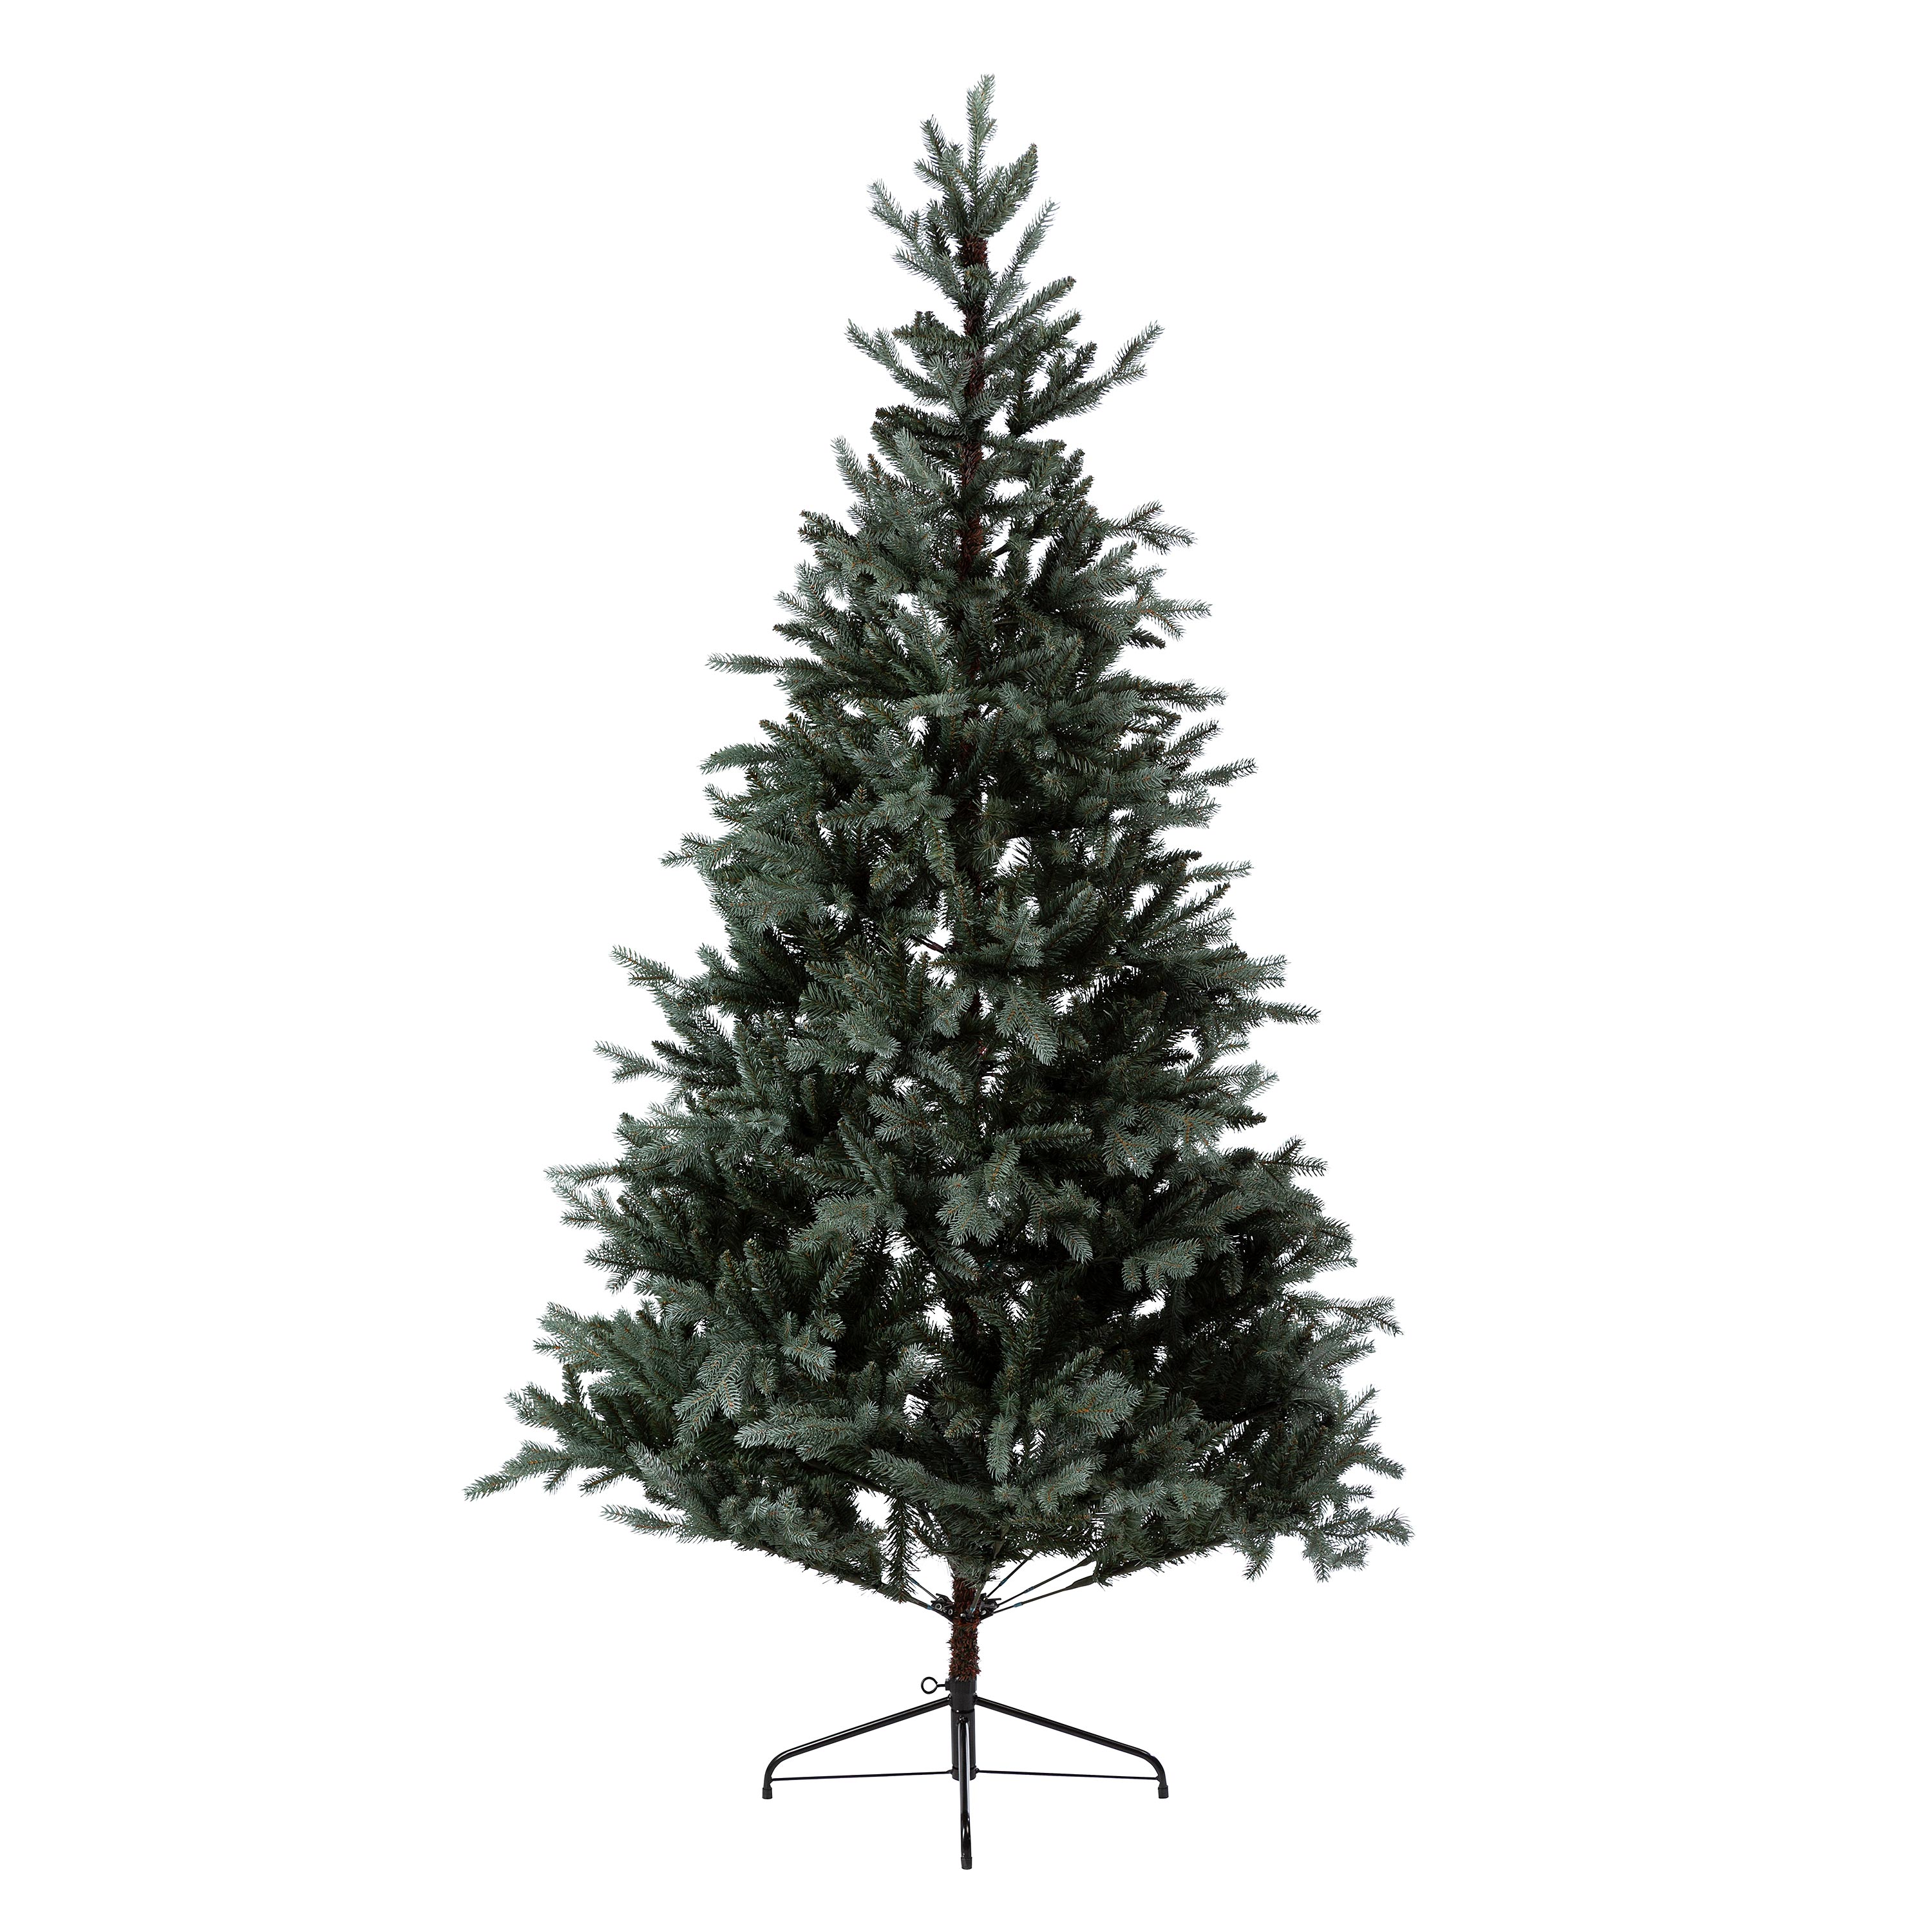 Shimmering Misty Pine Christmas Tree, 7'H